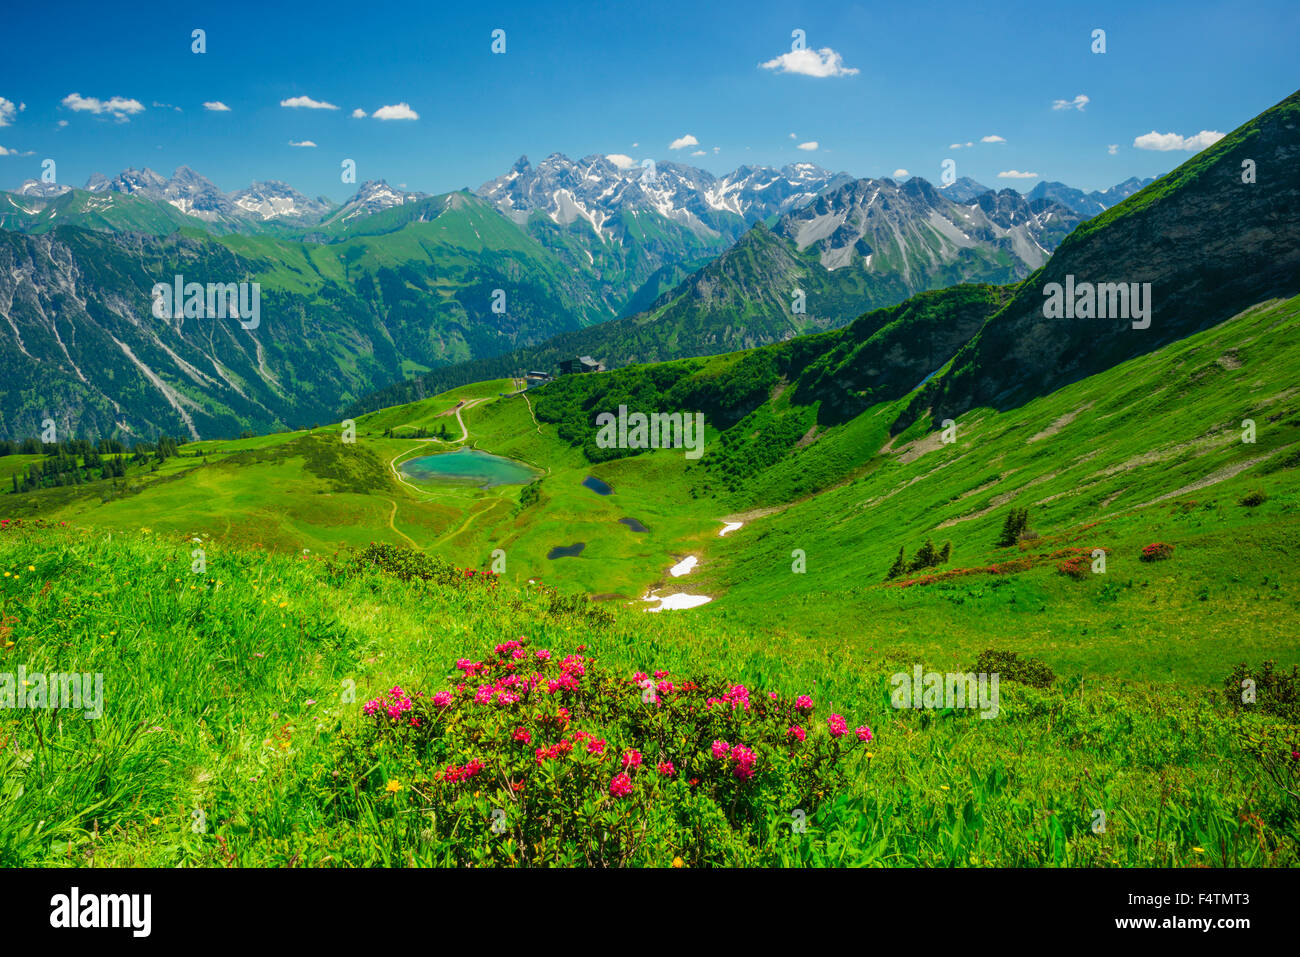 Allgäu, Allgäu Alps, Alps, Alpine, plant, Alpine, roses, blossom, Bavarian, near Oberstdorf, mountain landscape, mountain lake, Stock Photo